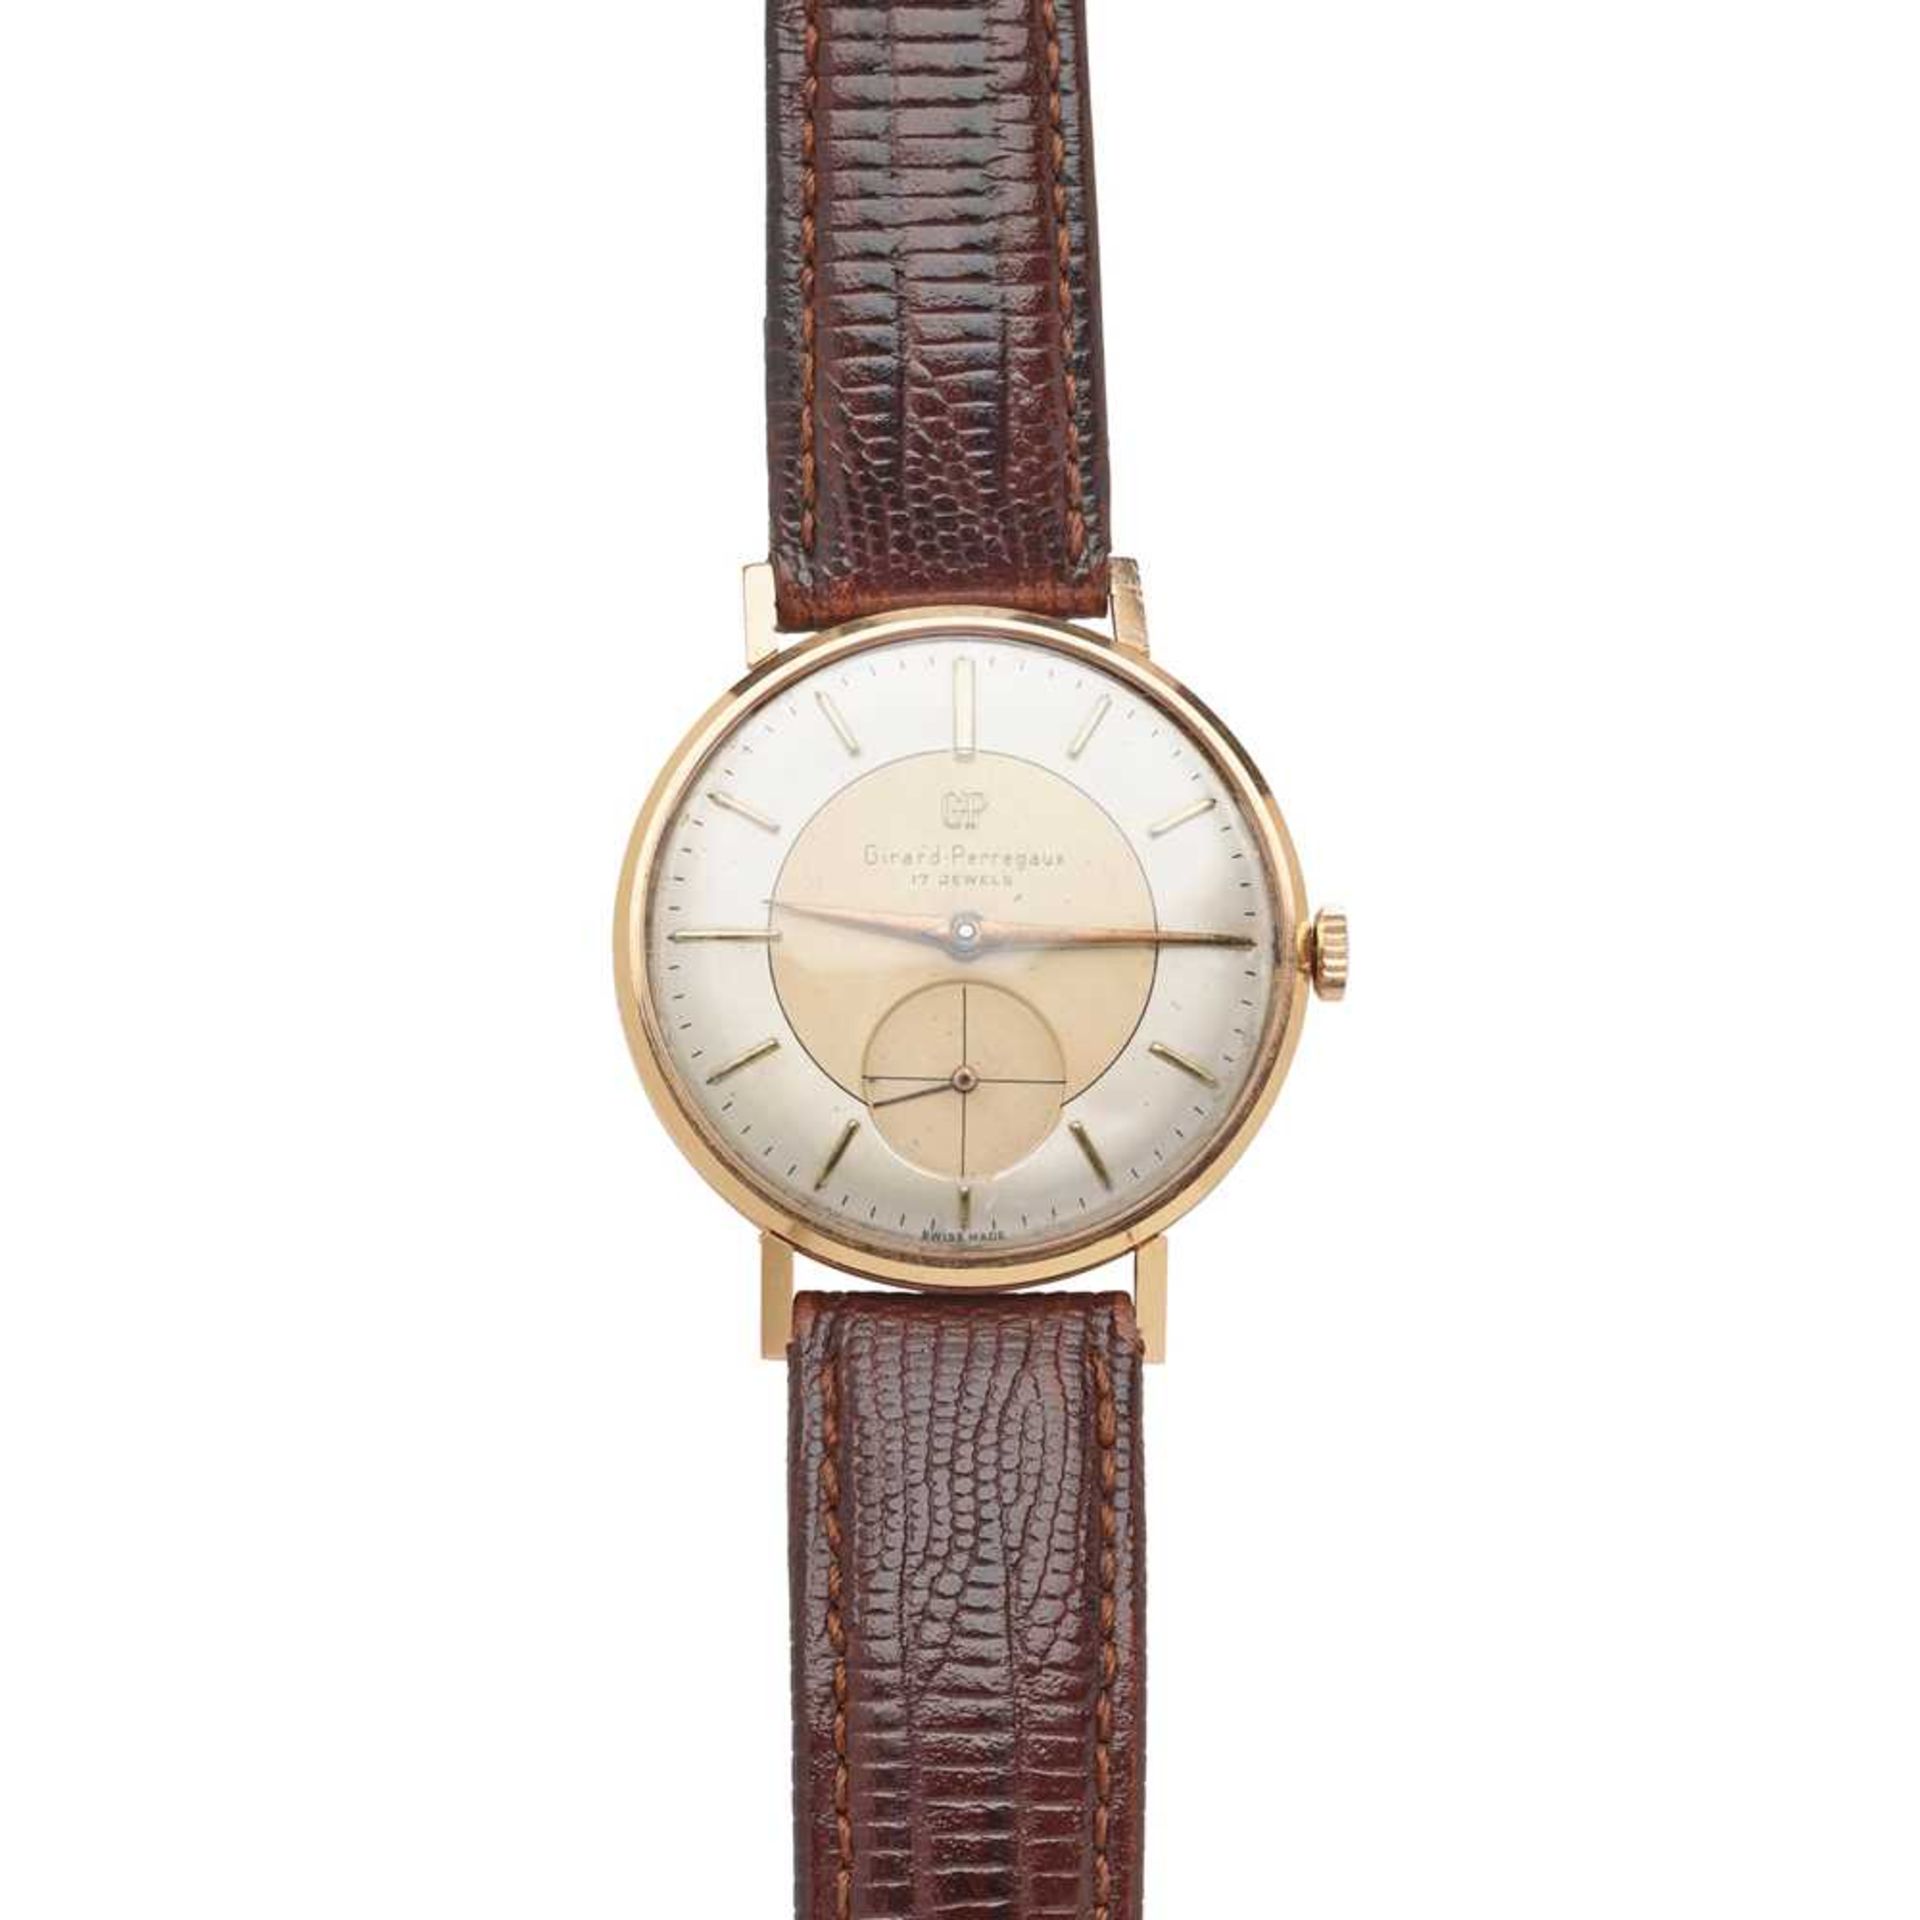 Girard-Perregaux: a mid-century wrist watch